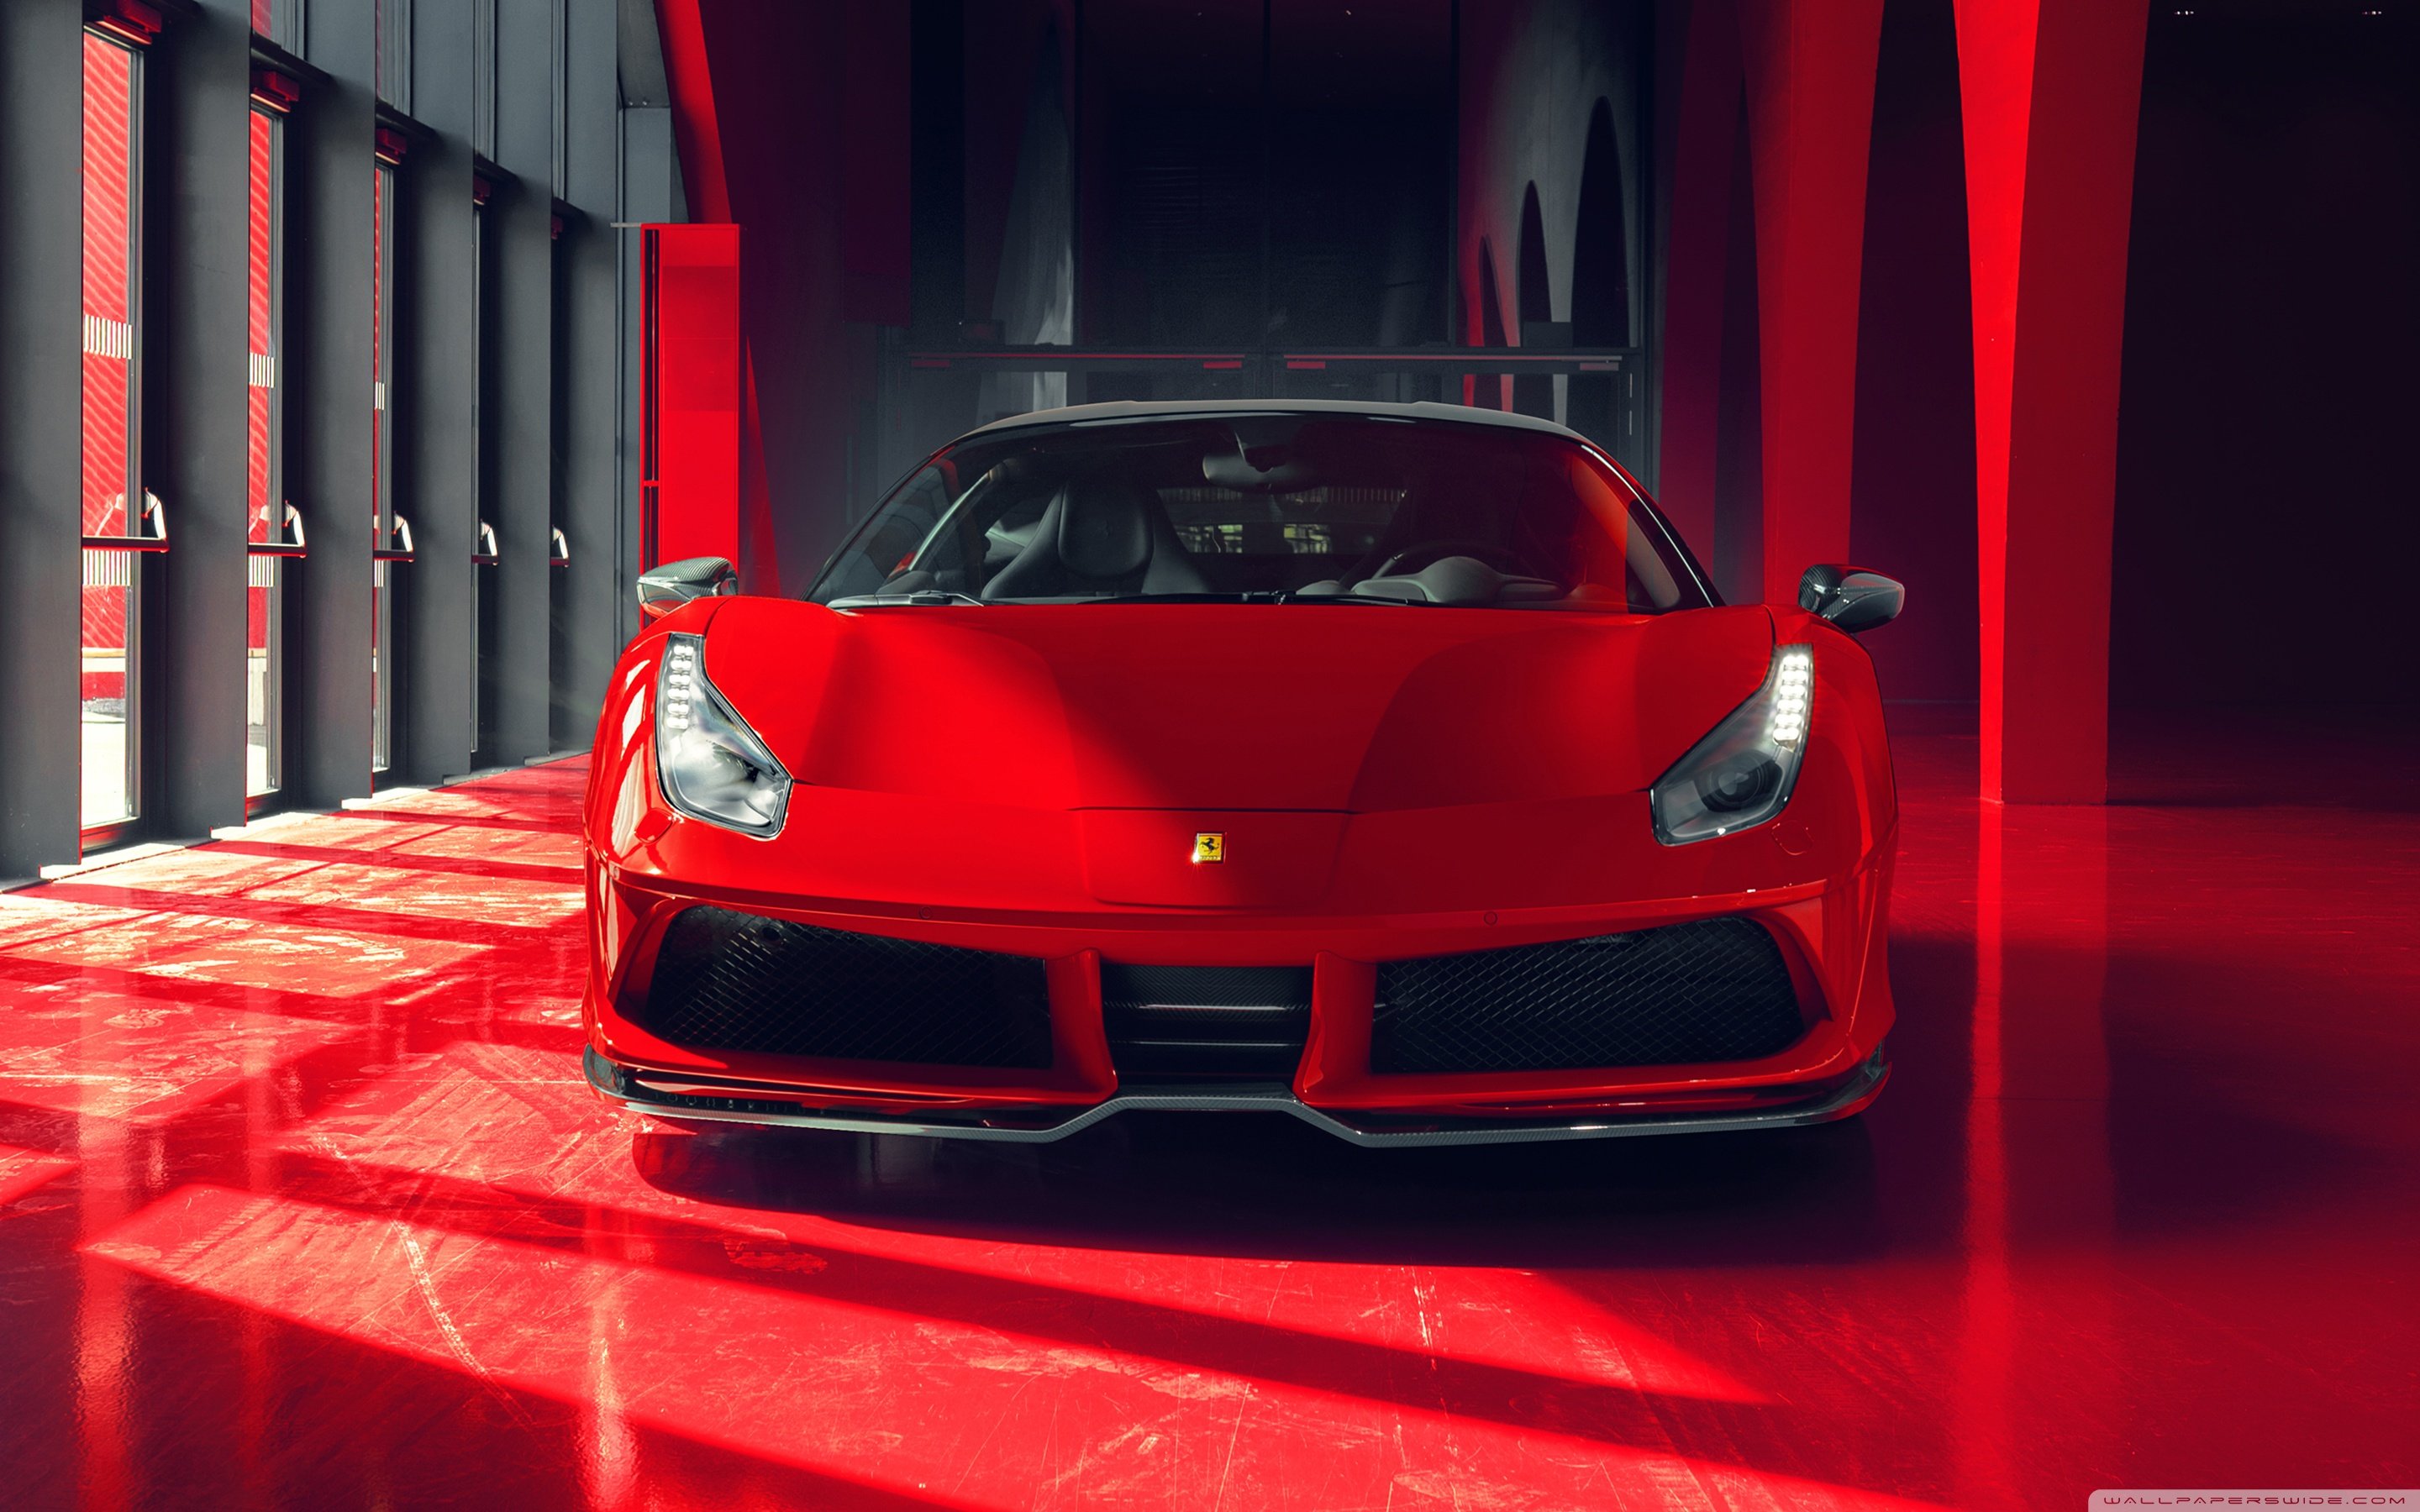 Red Ferrari Car Wallpapers - Wallpaper Cave